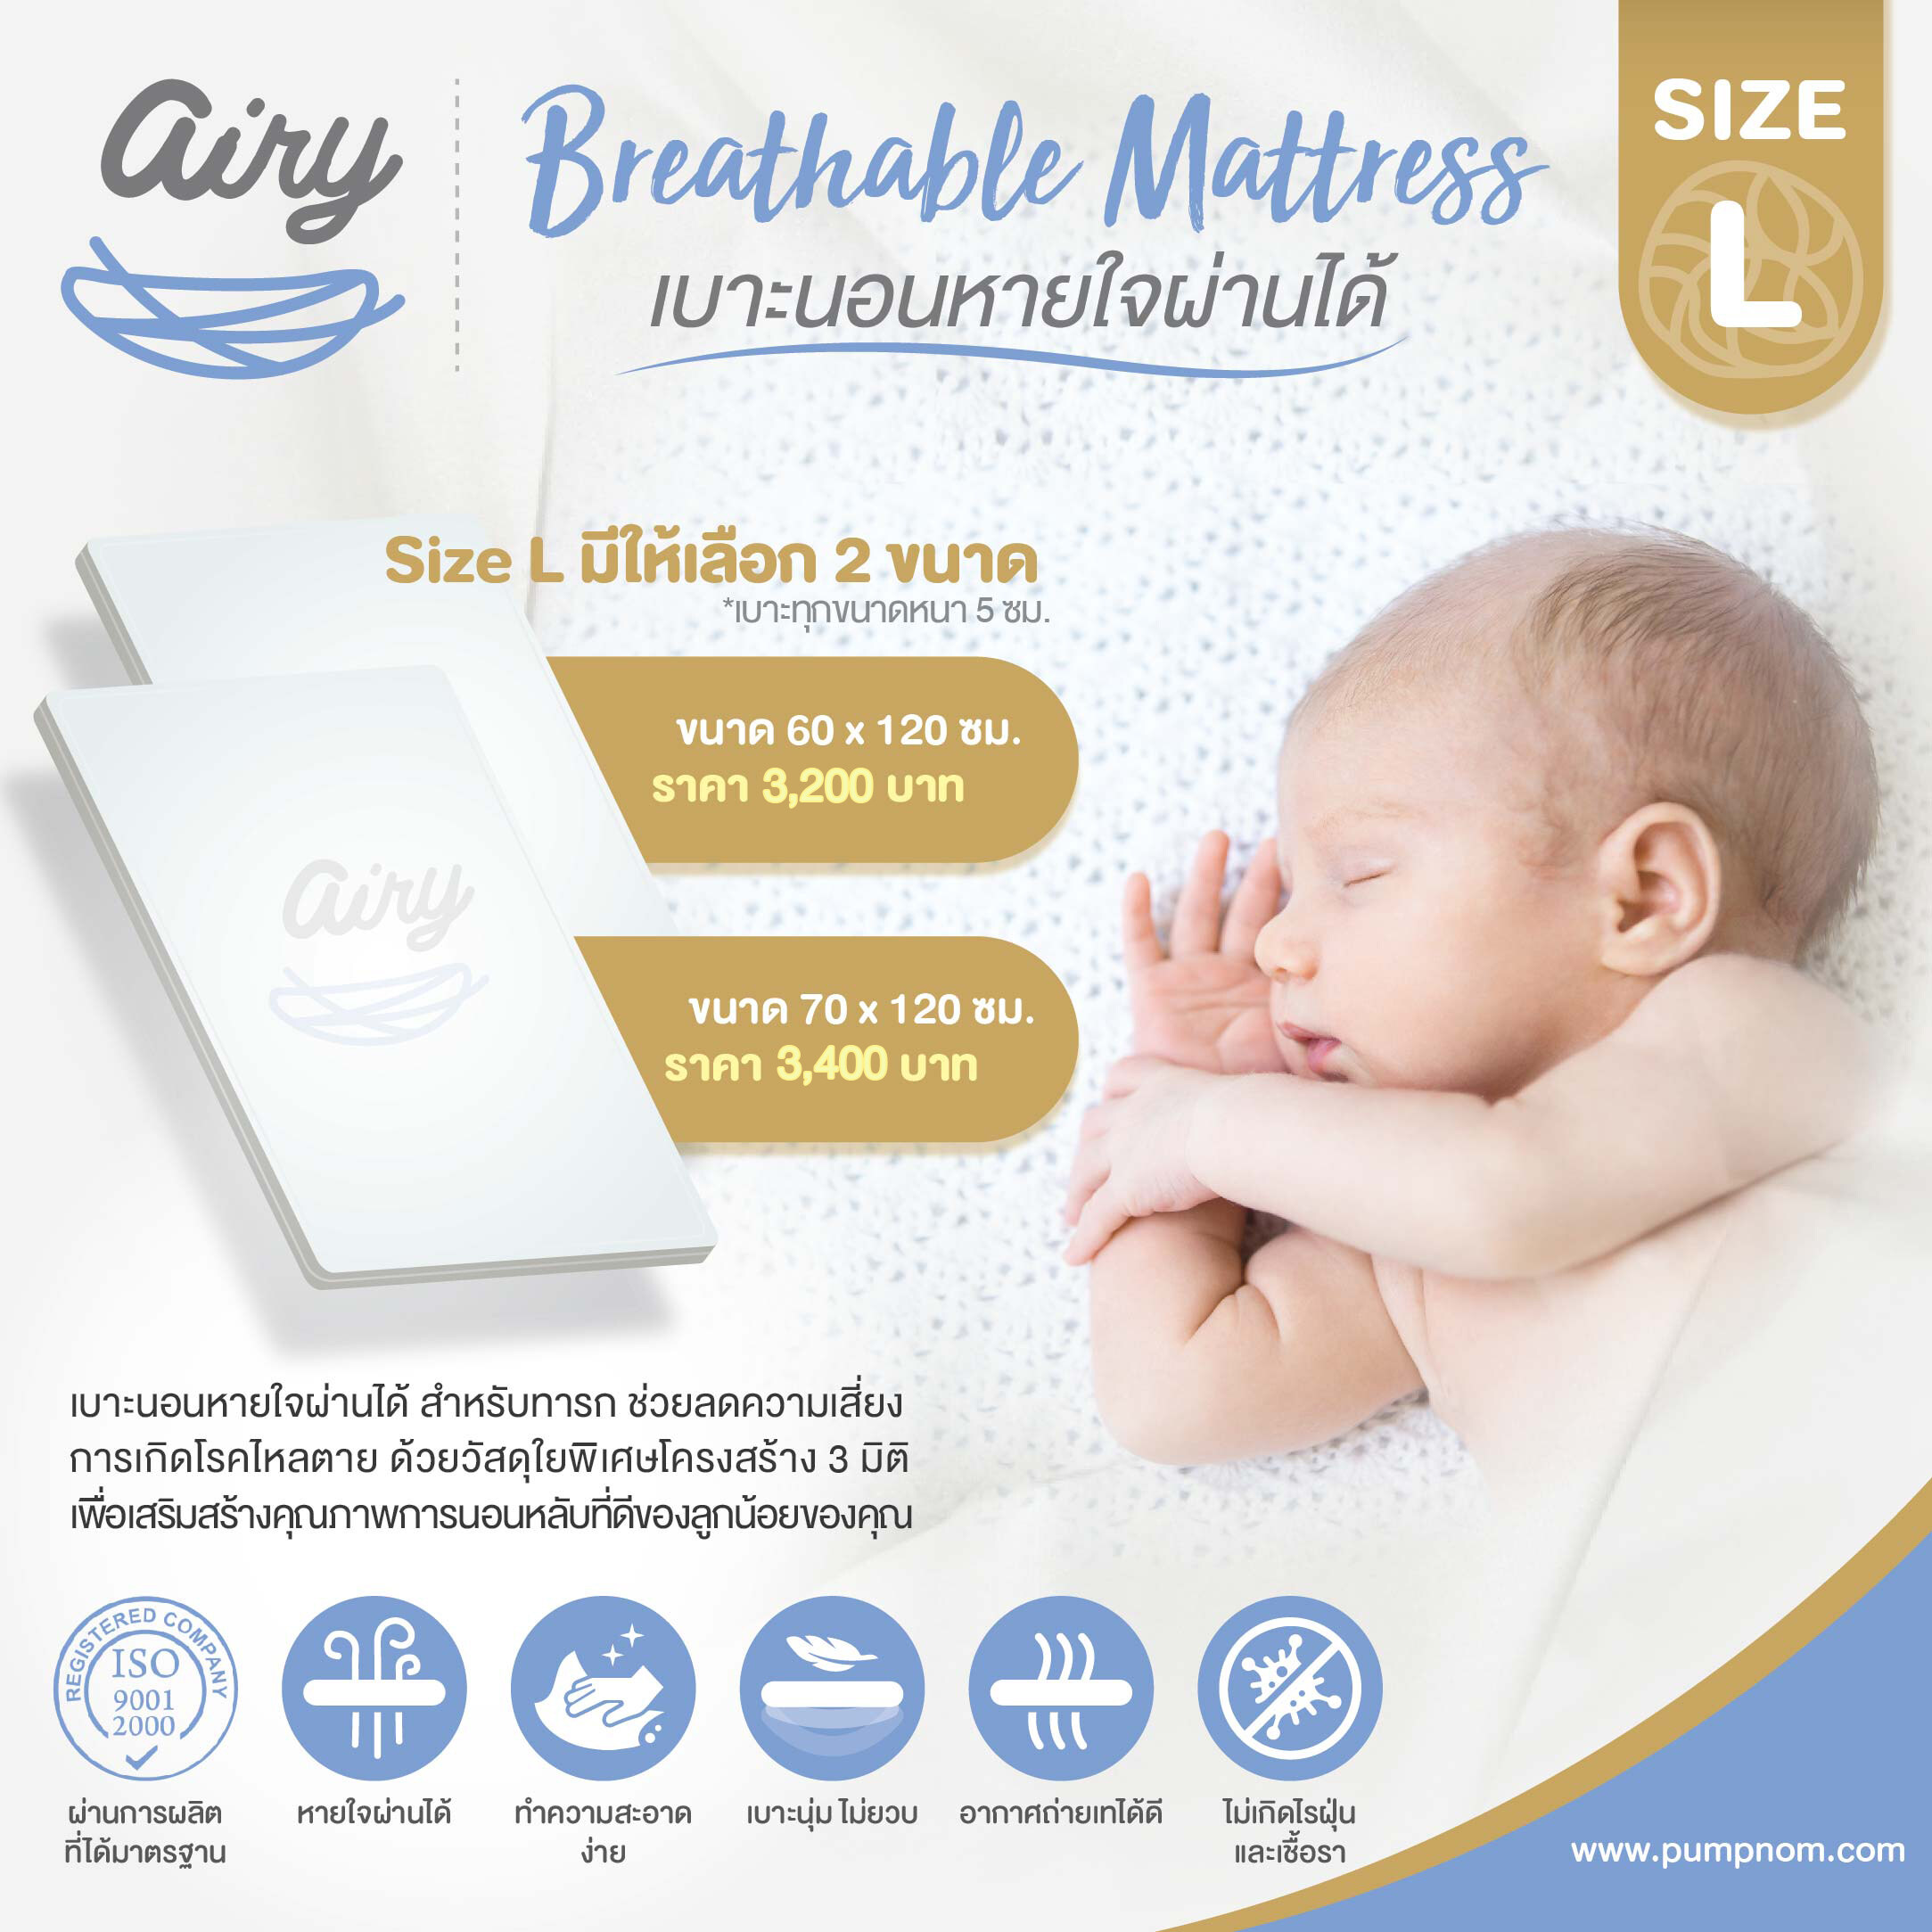 AIRY (แอร์รี่) Breathable Matress (size L) เบาะนอนสำหรับน้องแรกเกิด หายใจผ่านได้ ไม่เกิดไรฝุ่นและเชื้อรา